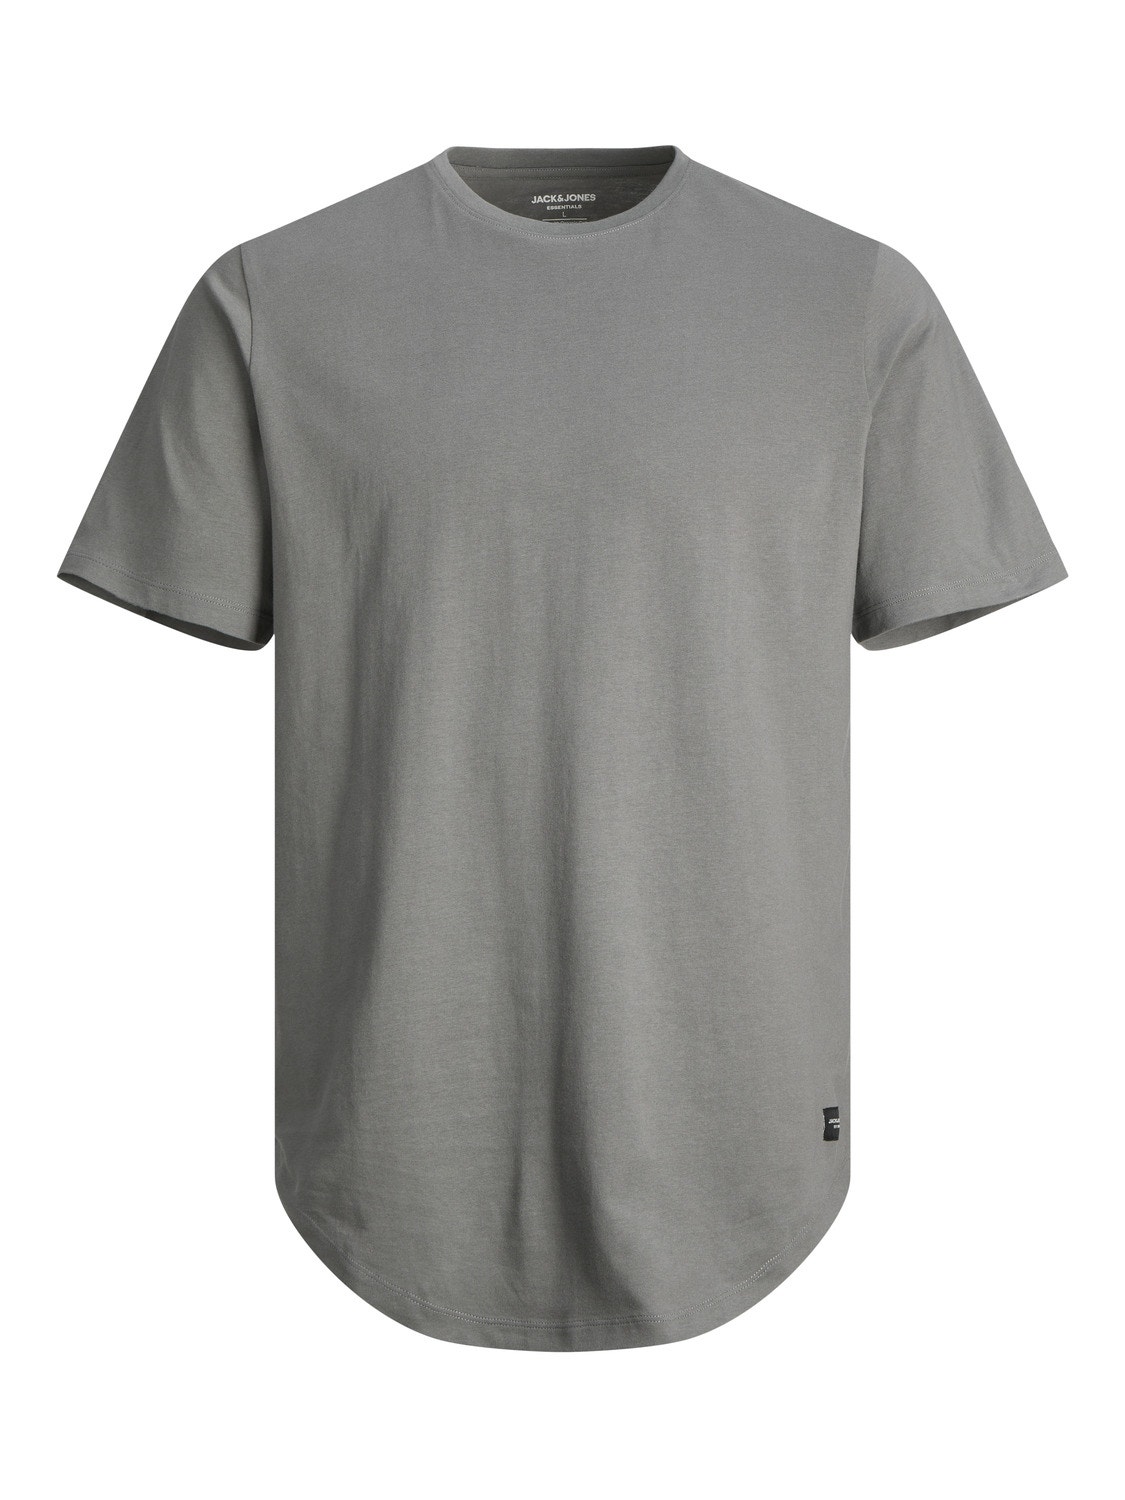 Jack & Jones Plain Crew neck T-shirt -Sedona Sage - 12113648